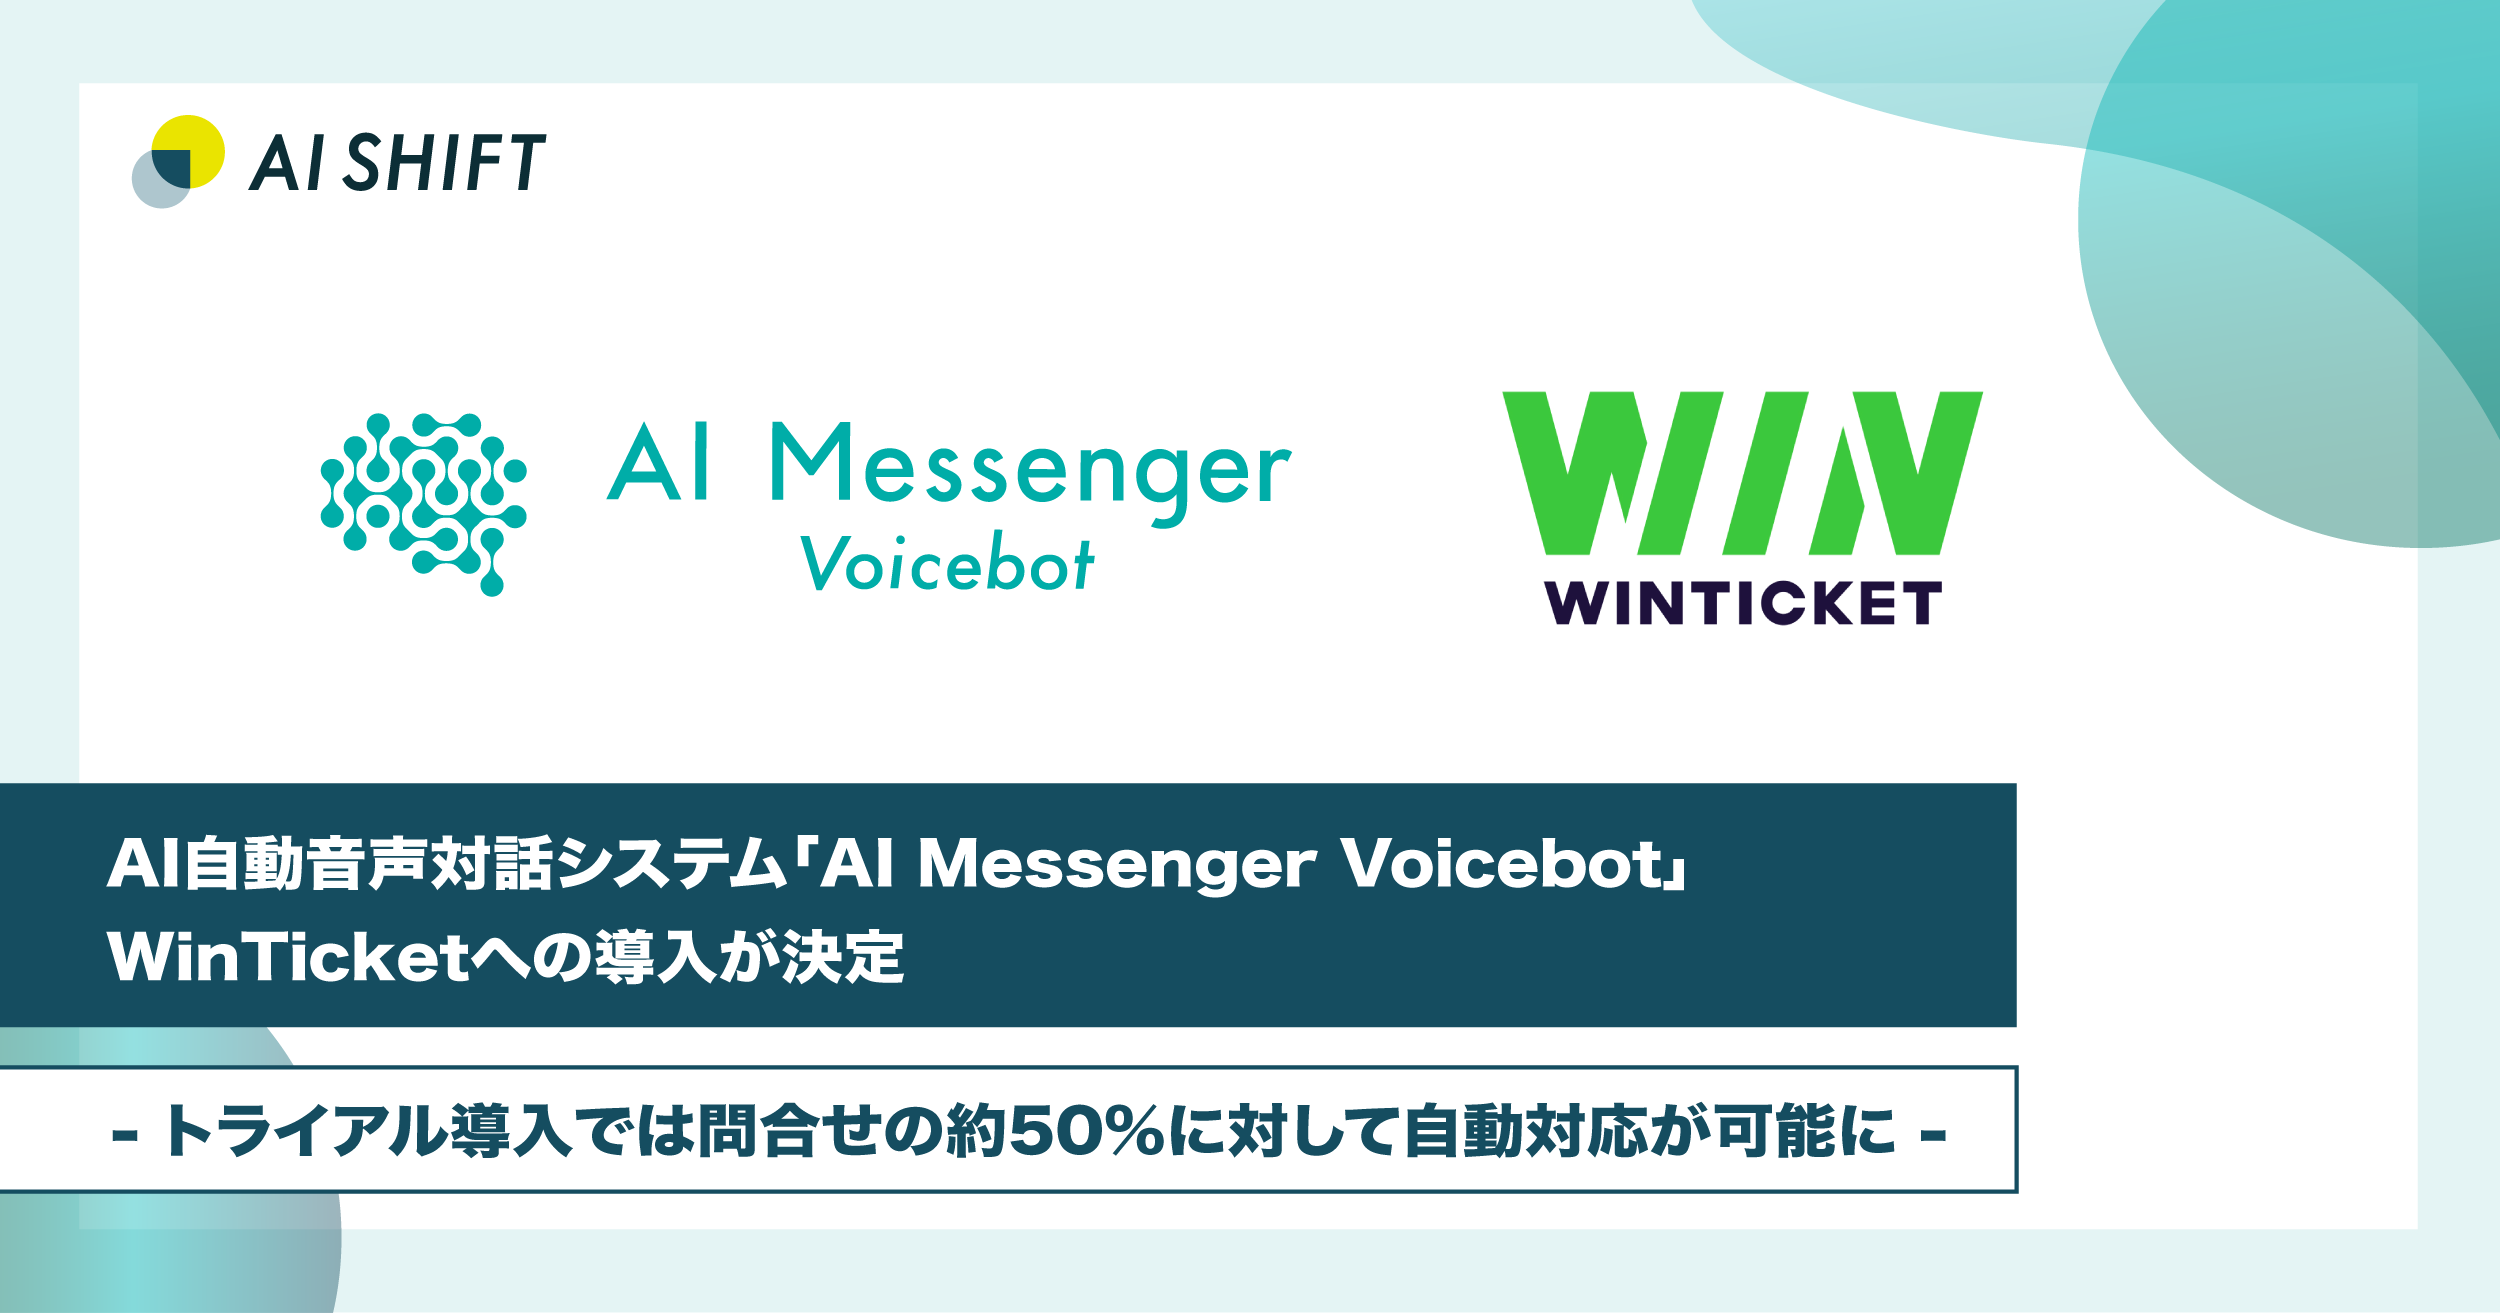 AI自動音声対話システムAI Messenger VoicebotWINTICKETへの導入が決定 トライアル導入では問合せの約 に対して自動対応が可能に 電話応対業務をDXする